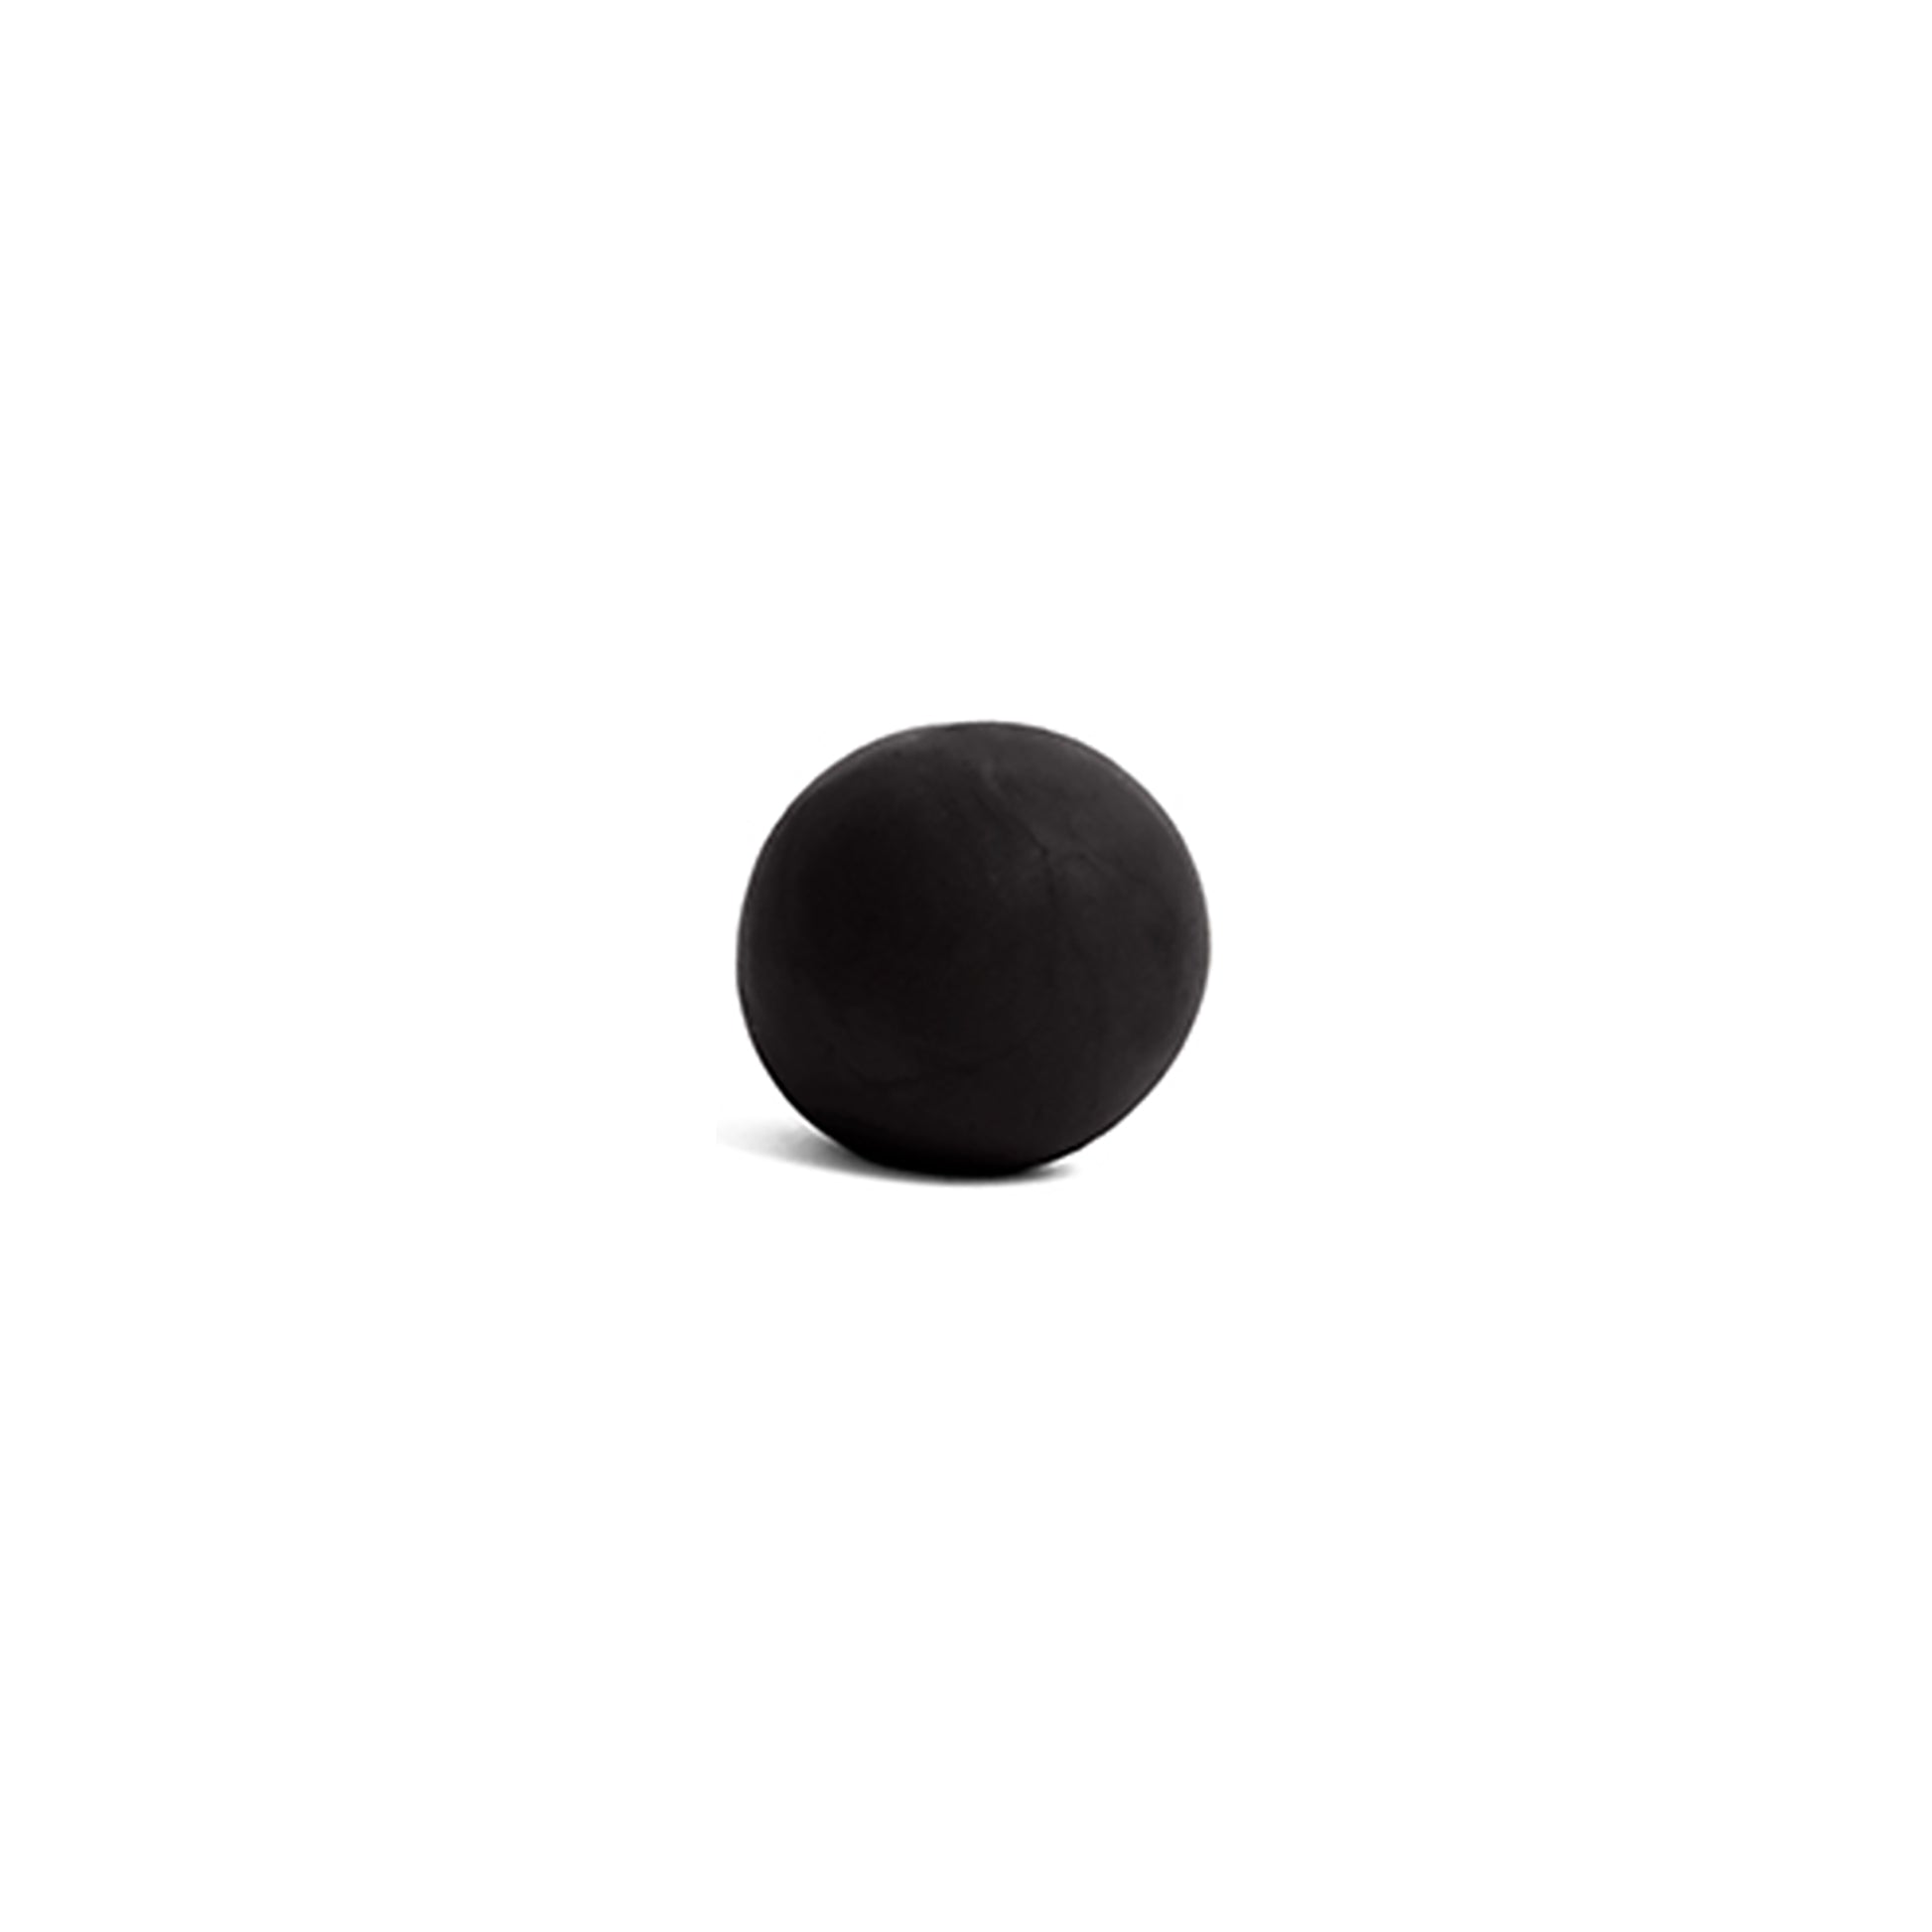 ChocoPan Black Chocolate Fondant - 1 lb. Pail - Satin Ice